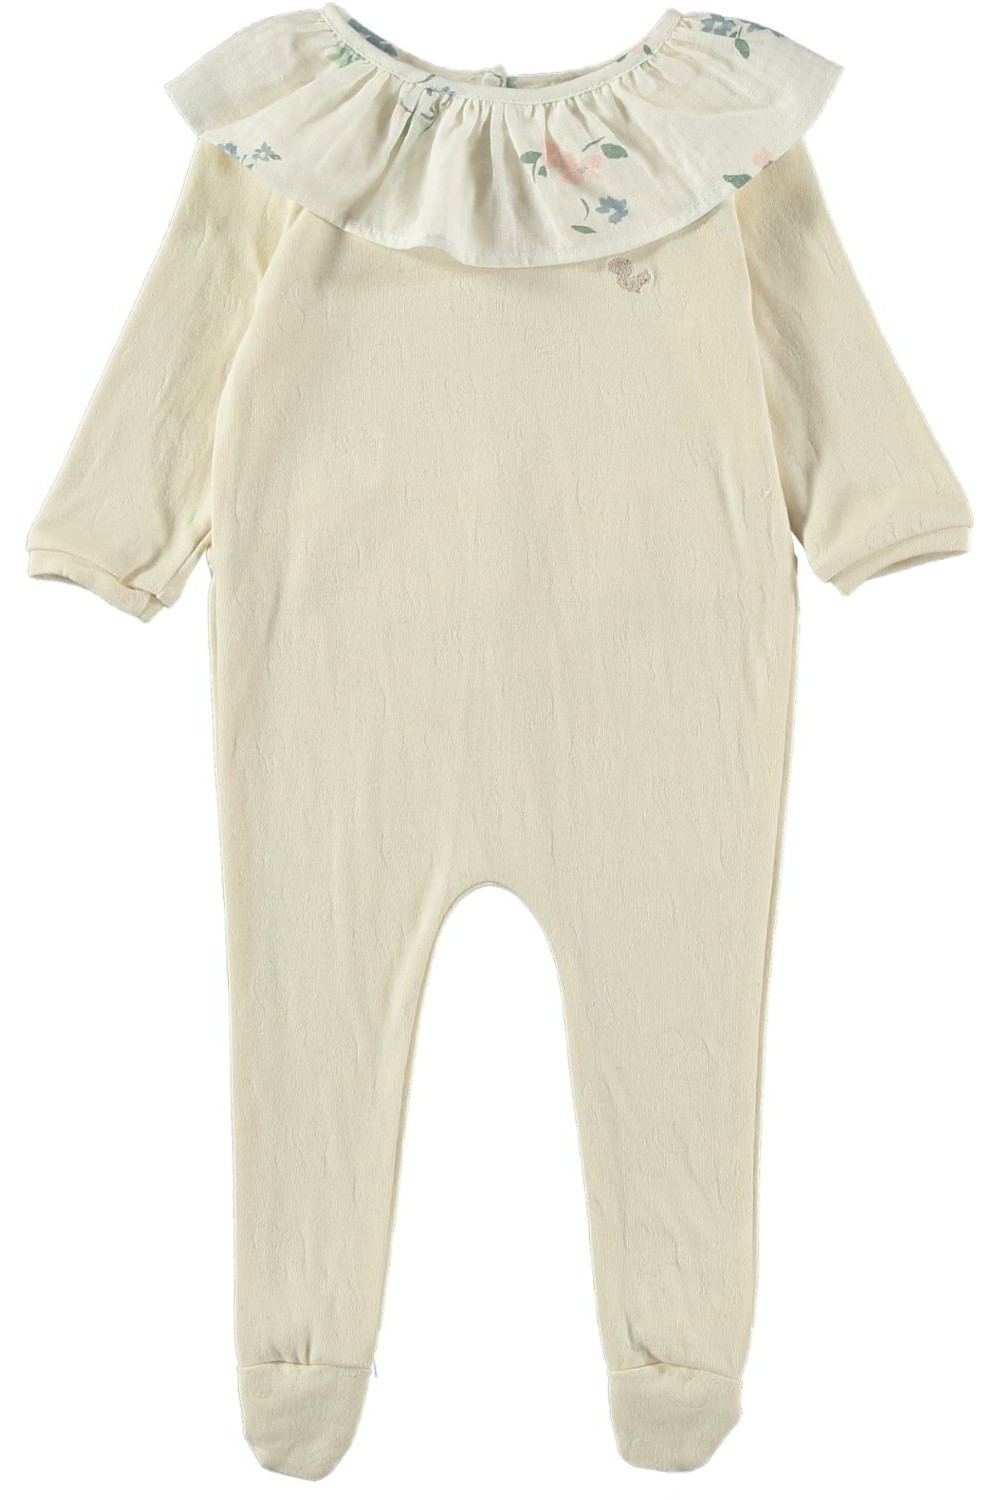 Pyjama bébé Caline coton bio non teint